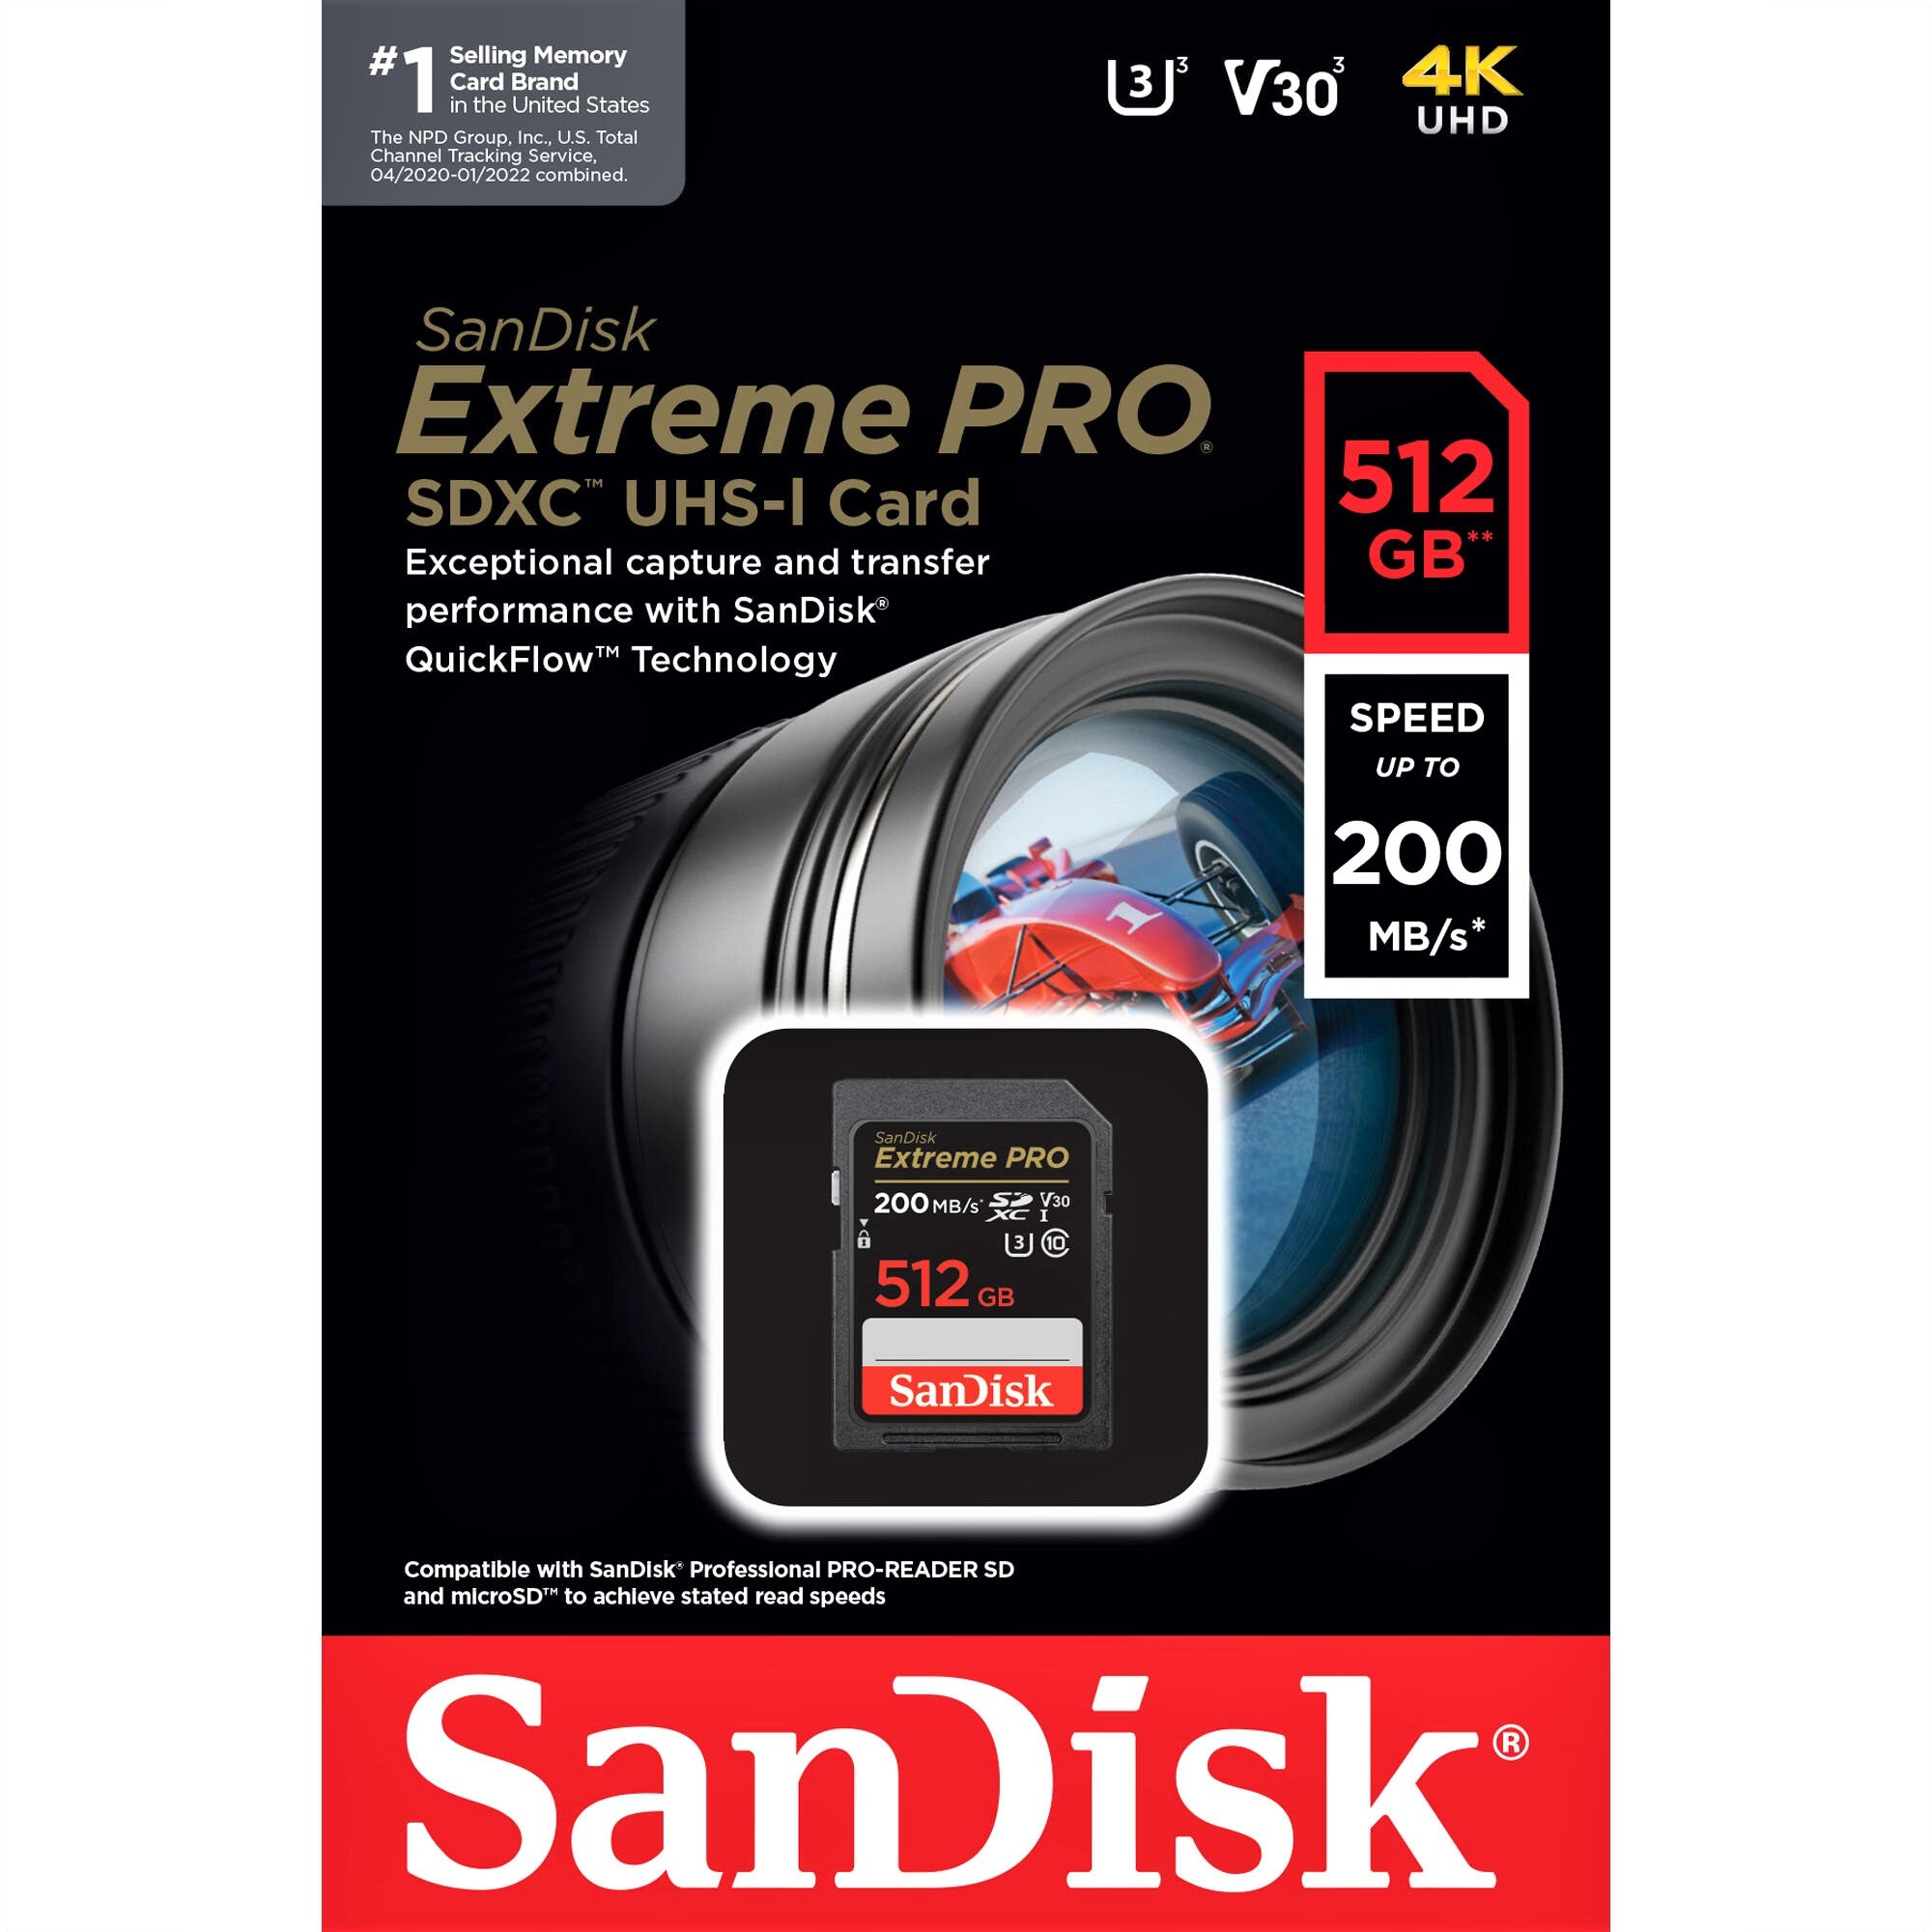 SanDisk 512GB Extreme PRO SDXC UHS-I Memory Card - C10, U3, V30, 4K UHD, SD Card - SDSDXXD-512G-GN4IN